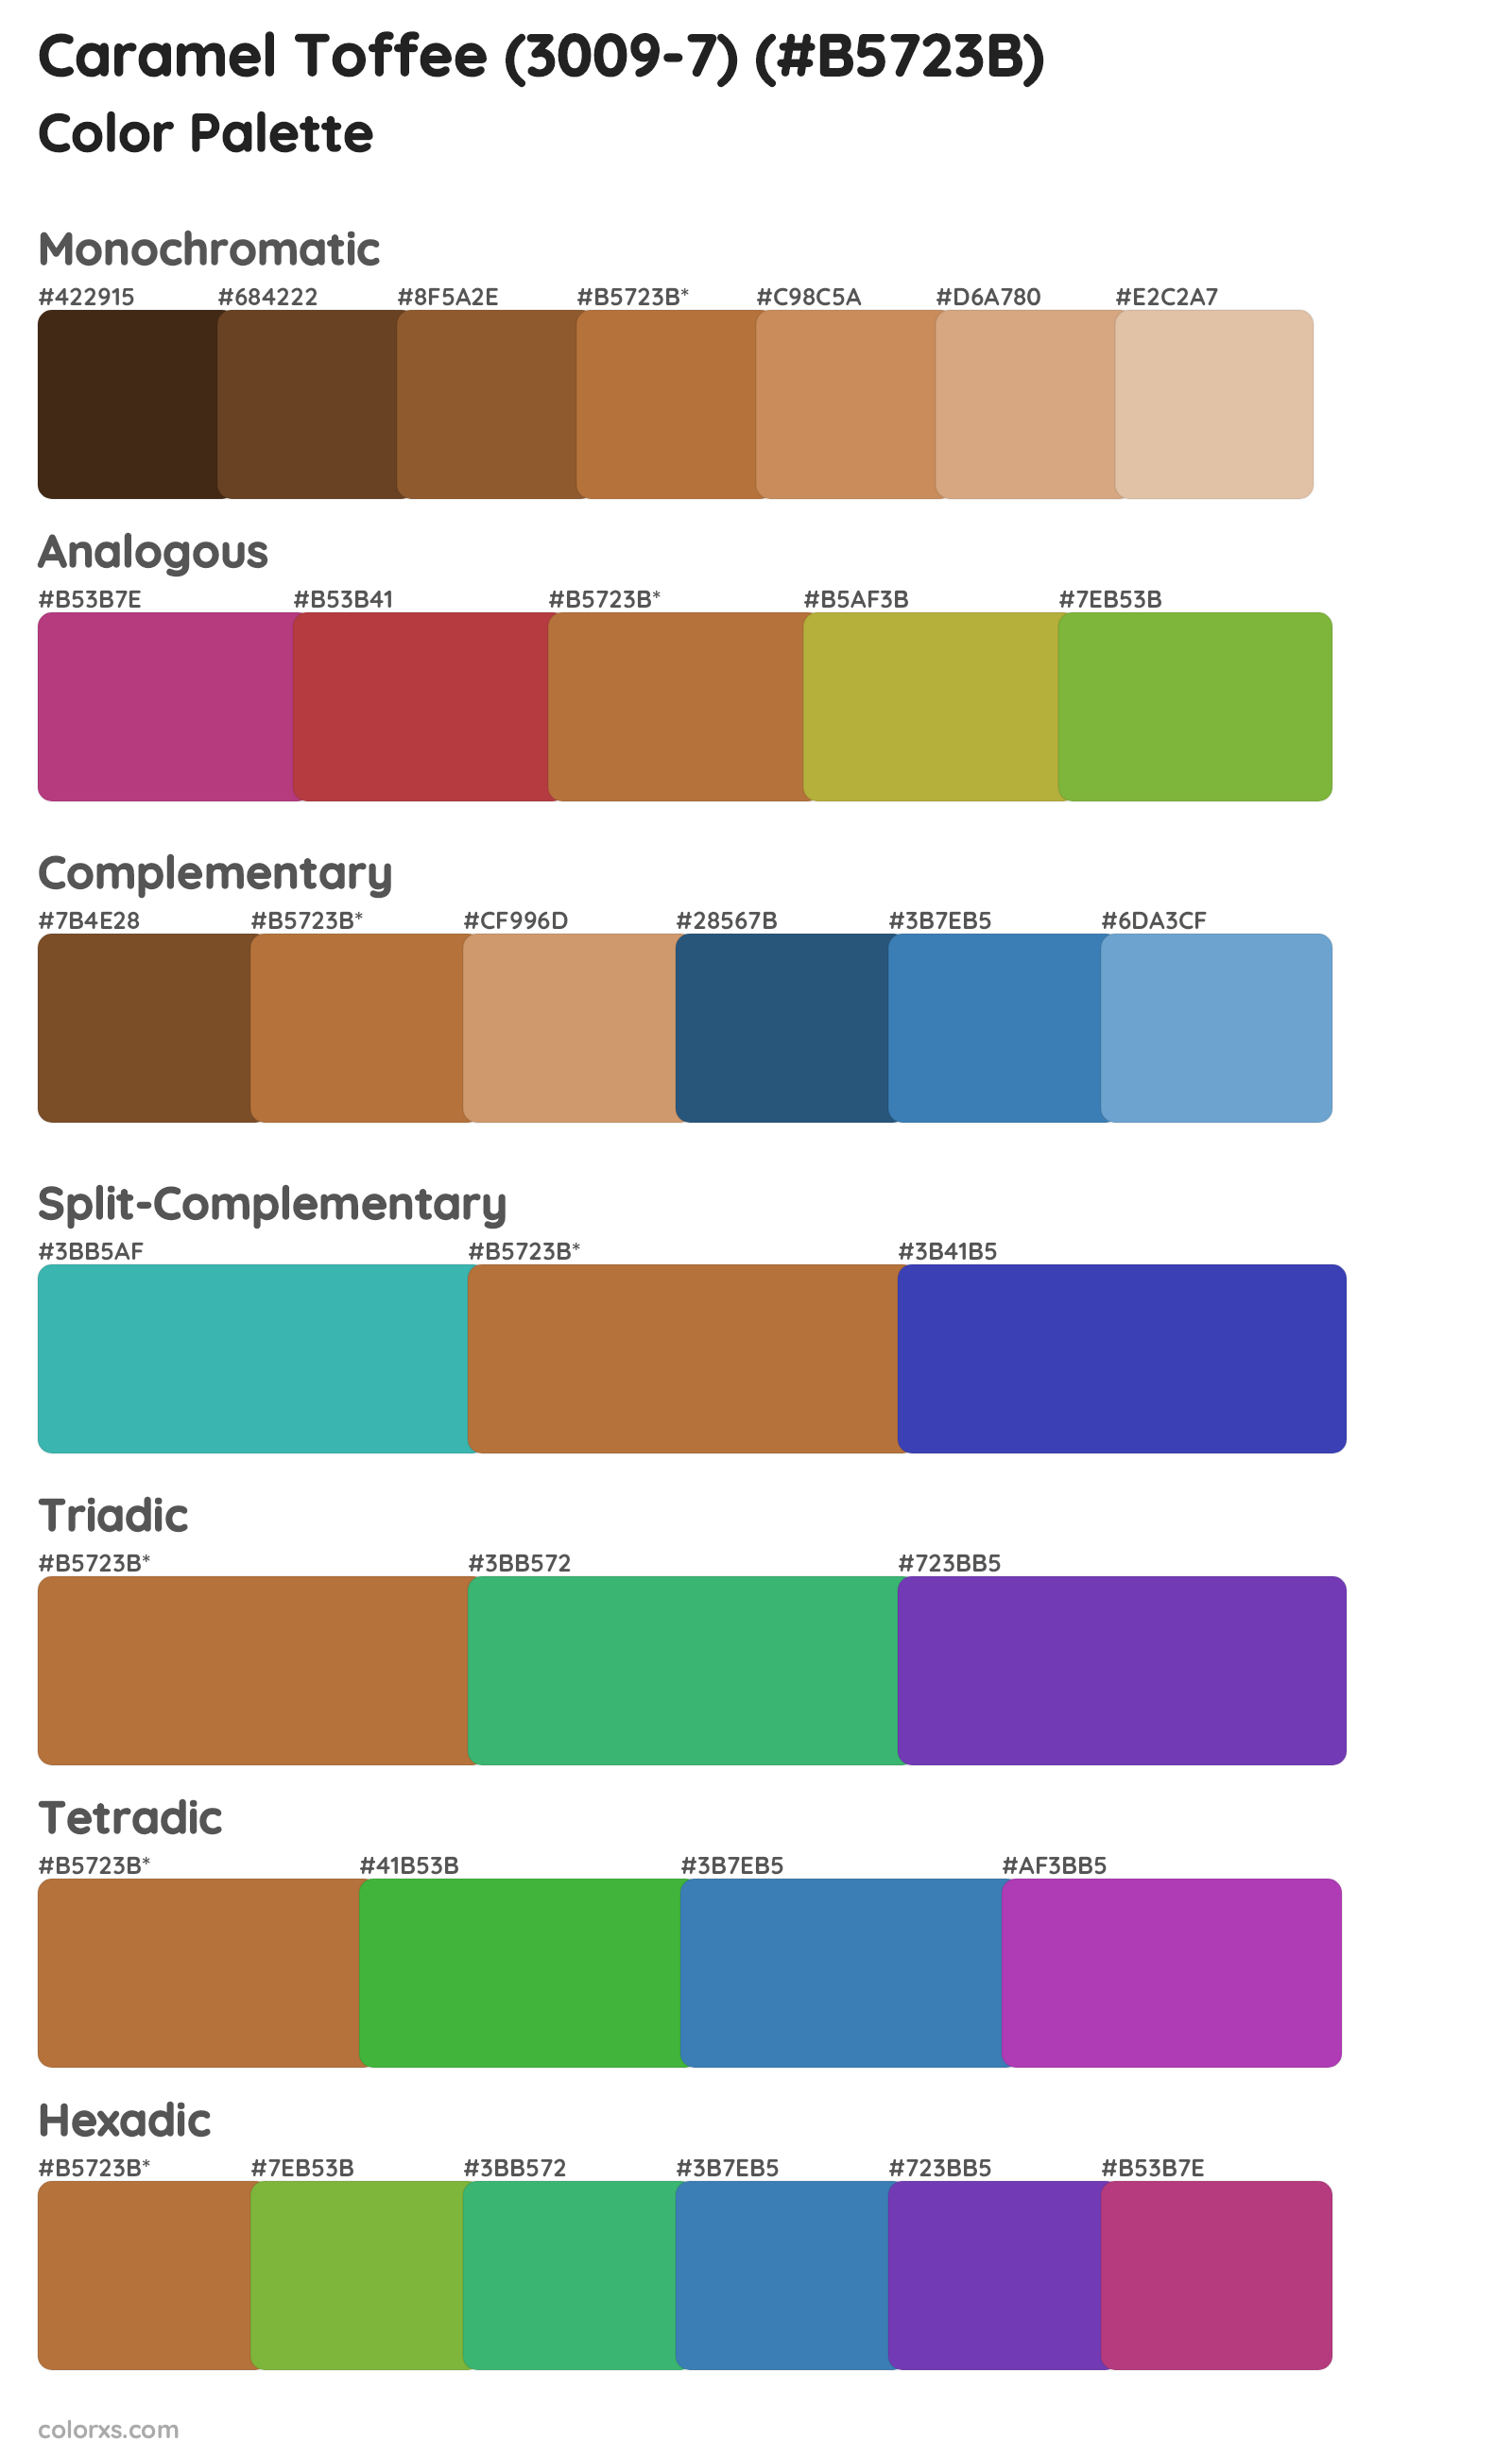 Caramel Toffee (3009-7) Color Scheme Palettes